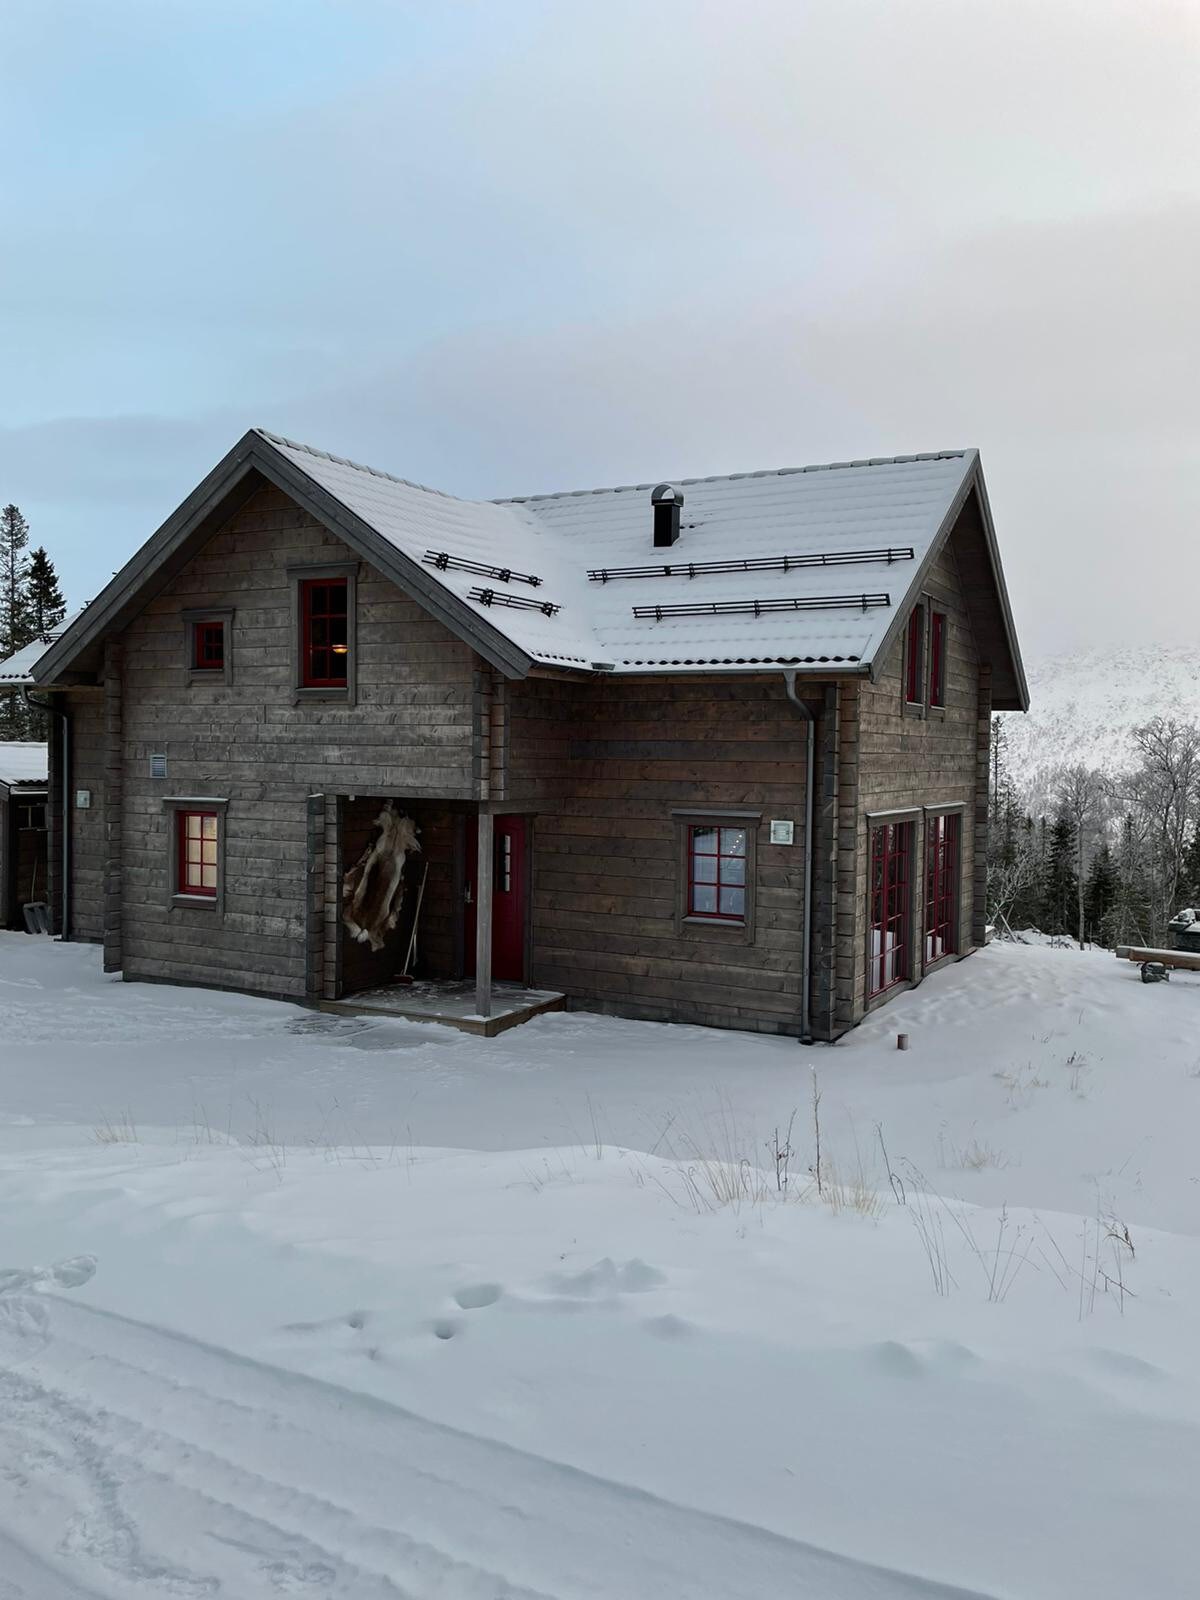 Bydalen的舒适乡村小屋。 滑雪出入滑雪场